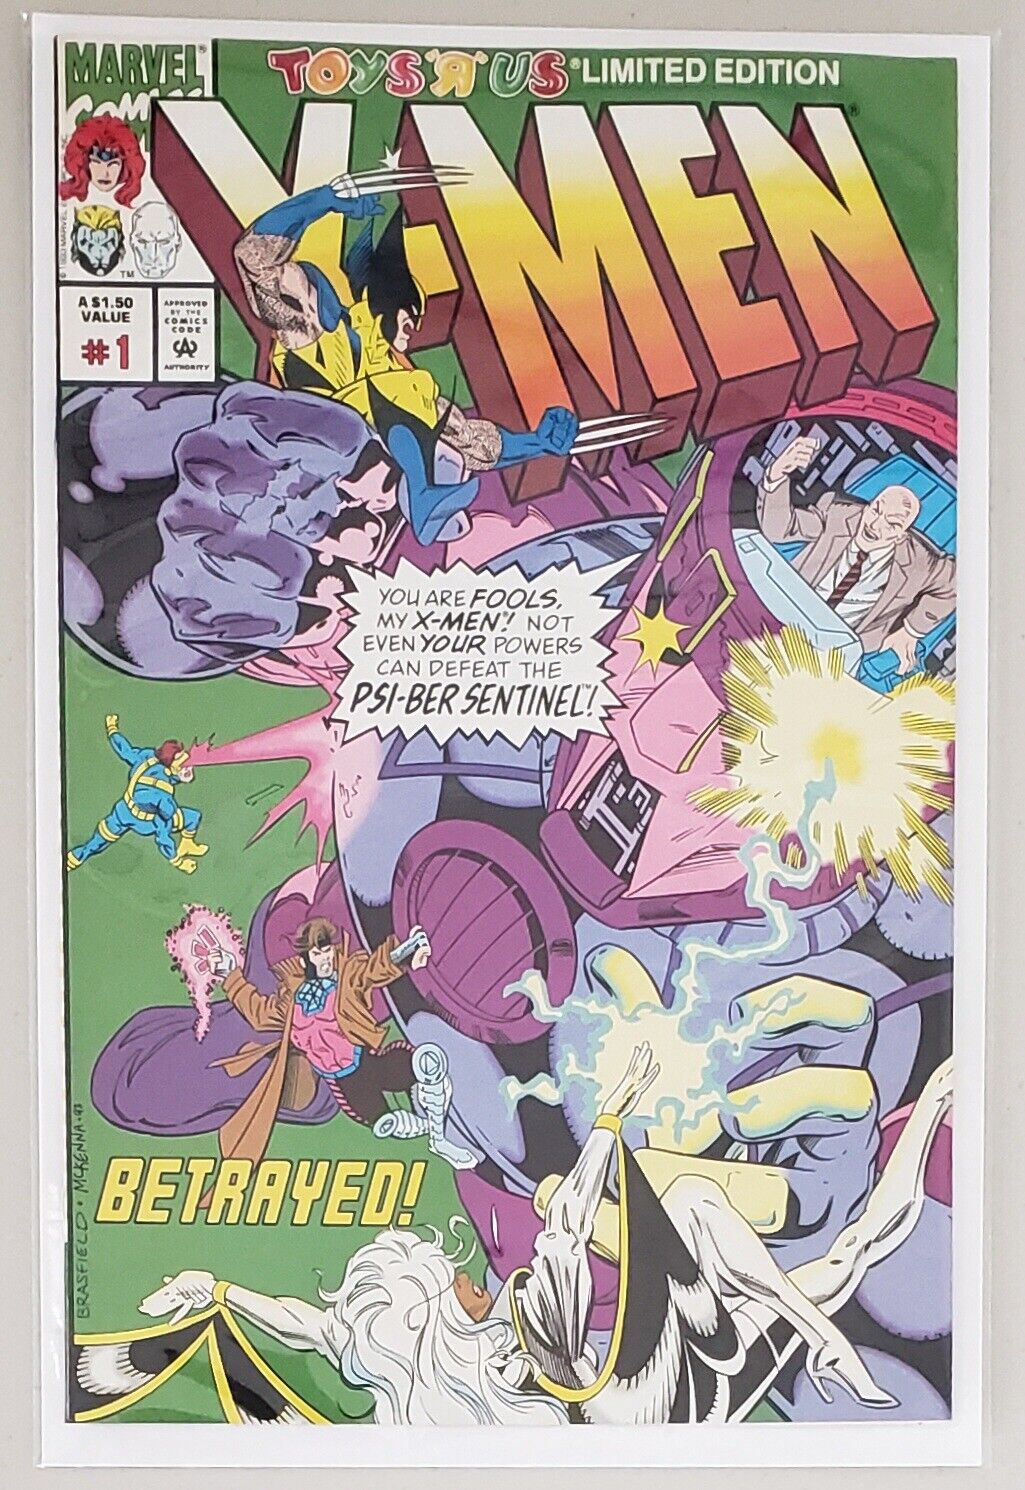 X-MEN #1 THE PSI-BER SCENARIO TOY R US LIMITED EDITION MARVEL COMICS 1993 